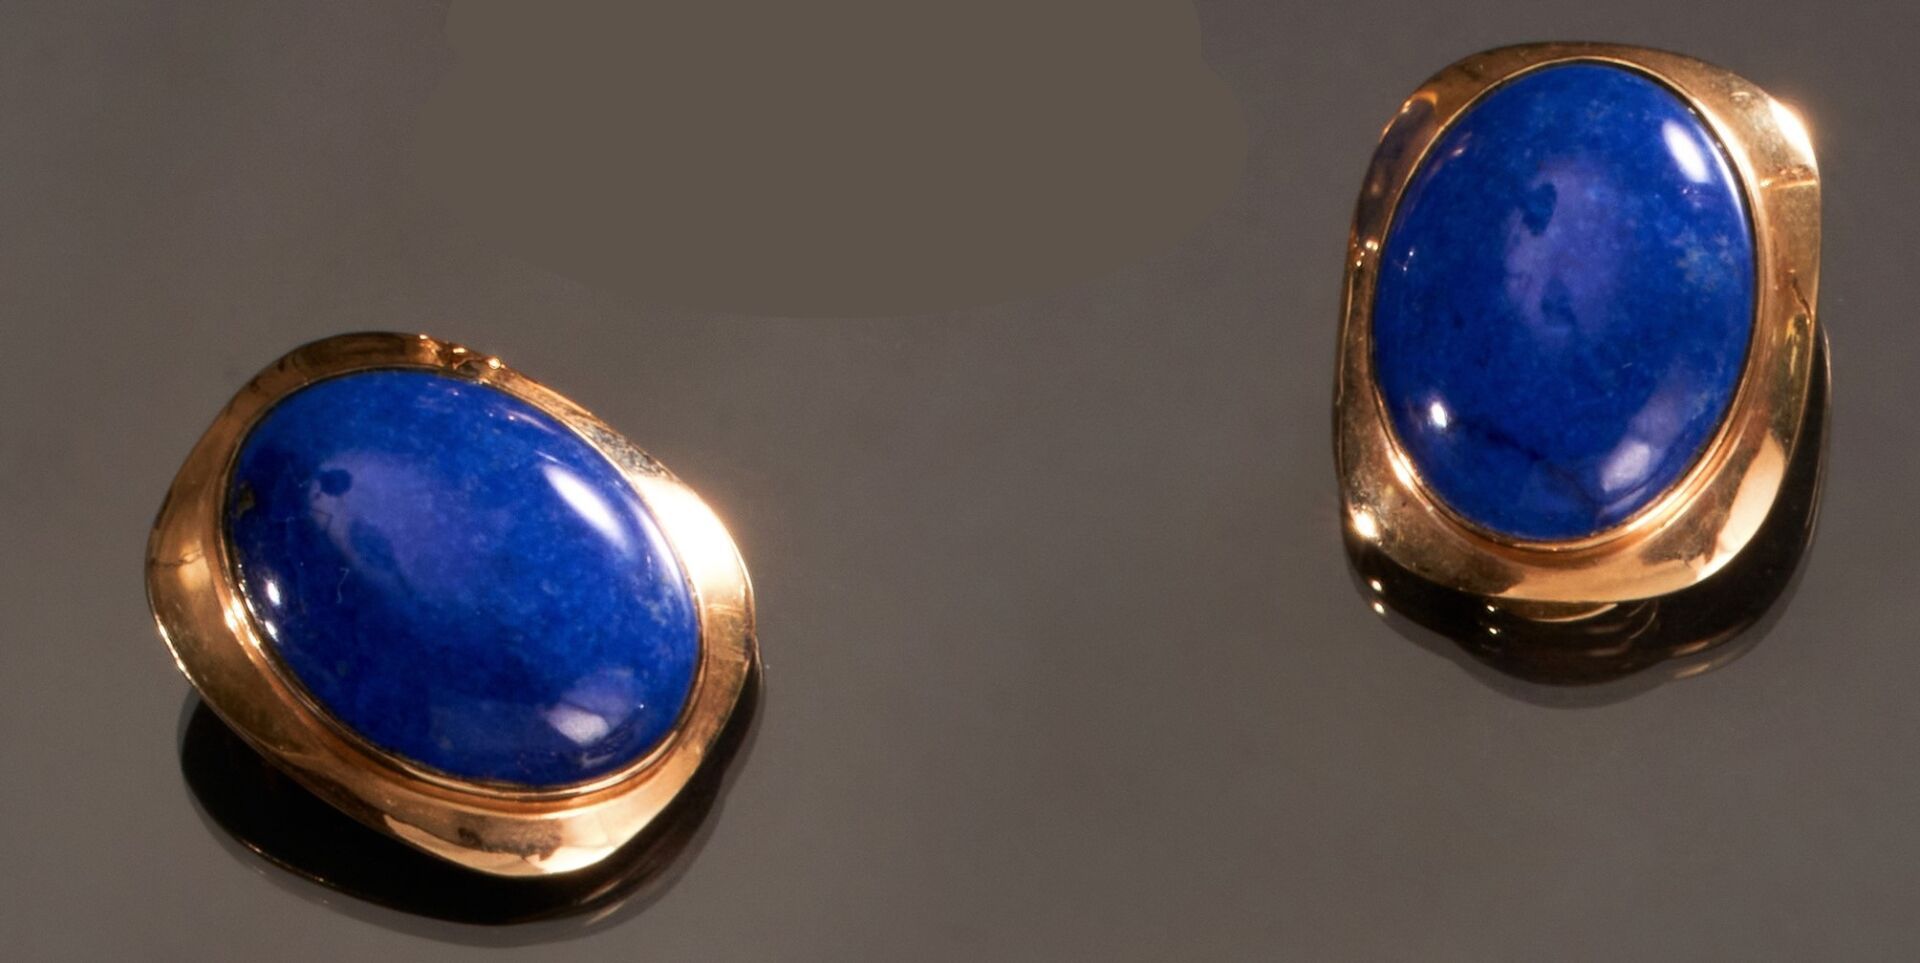 Null 第585000号黄金耳环一对，每只耳环上都有一颗着色的青金石凸圆石装饰。
系统带夹子。
(有胶水的痕迹)
高度 : 2,8 cm
毛重 : 17,4 &hellip;